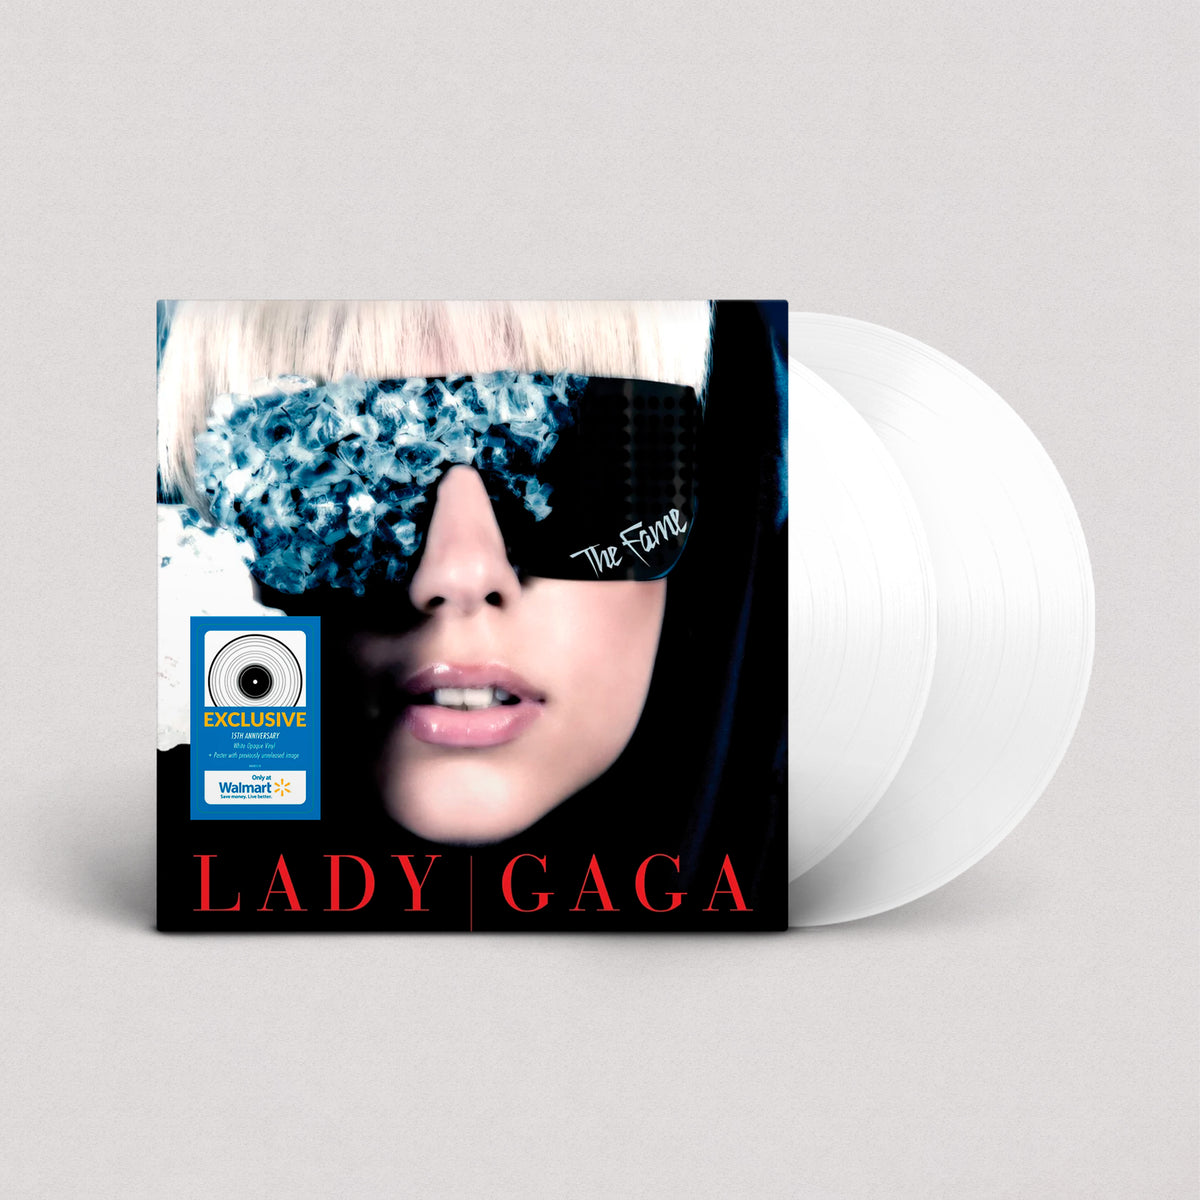 Lady Gaga - The Fame "15th Anniversary" (Walmart Exclusive, Vinilo 2'LP)